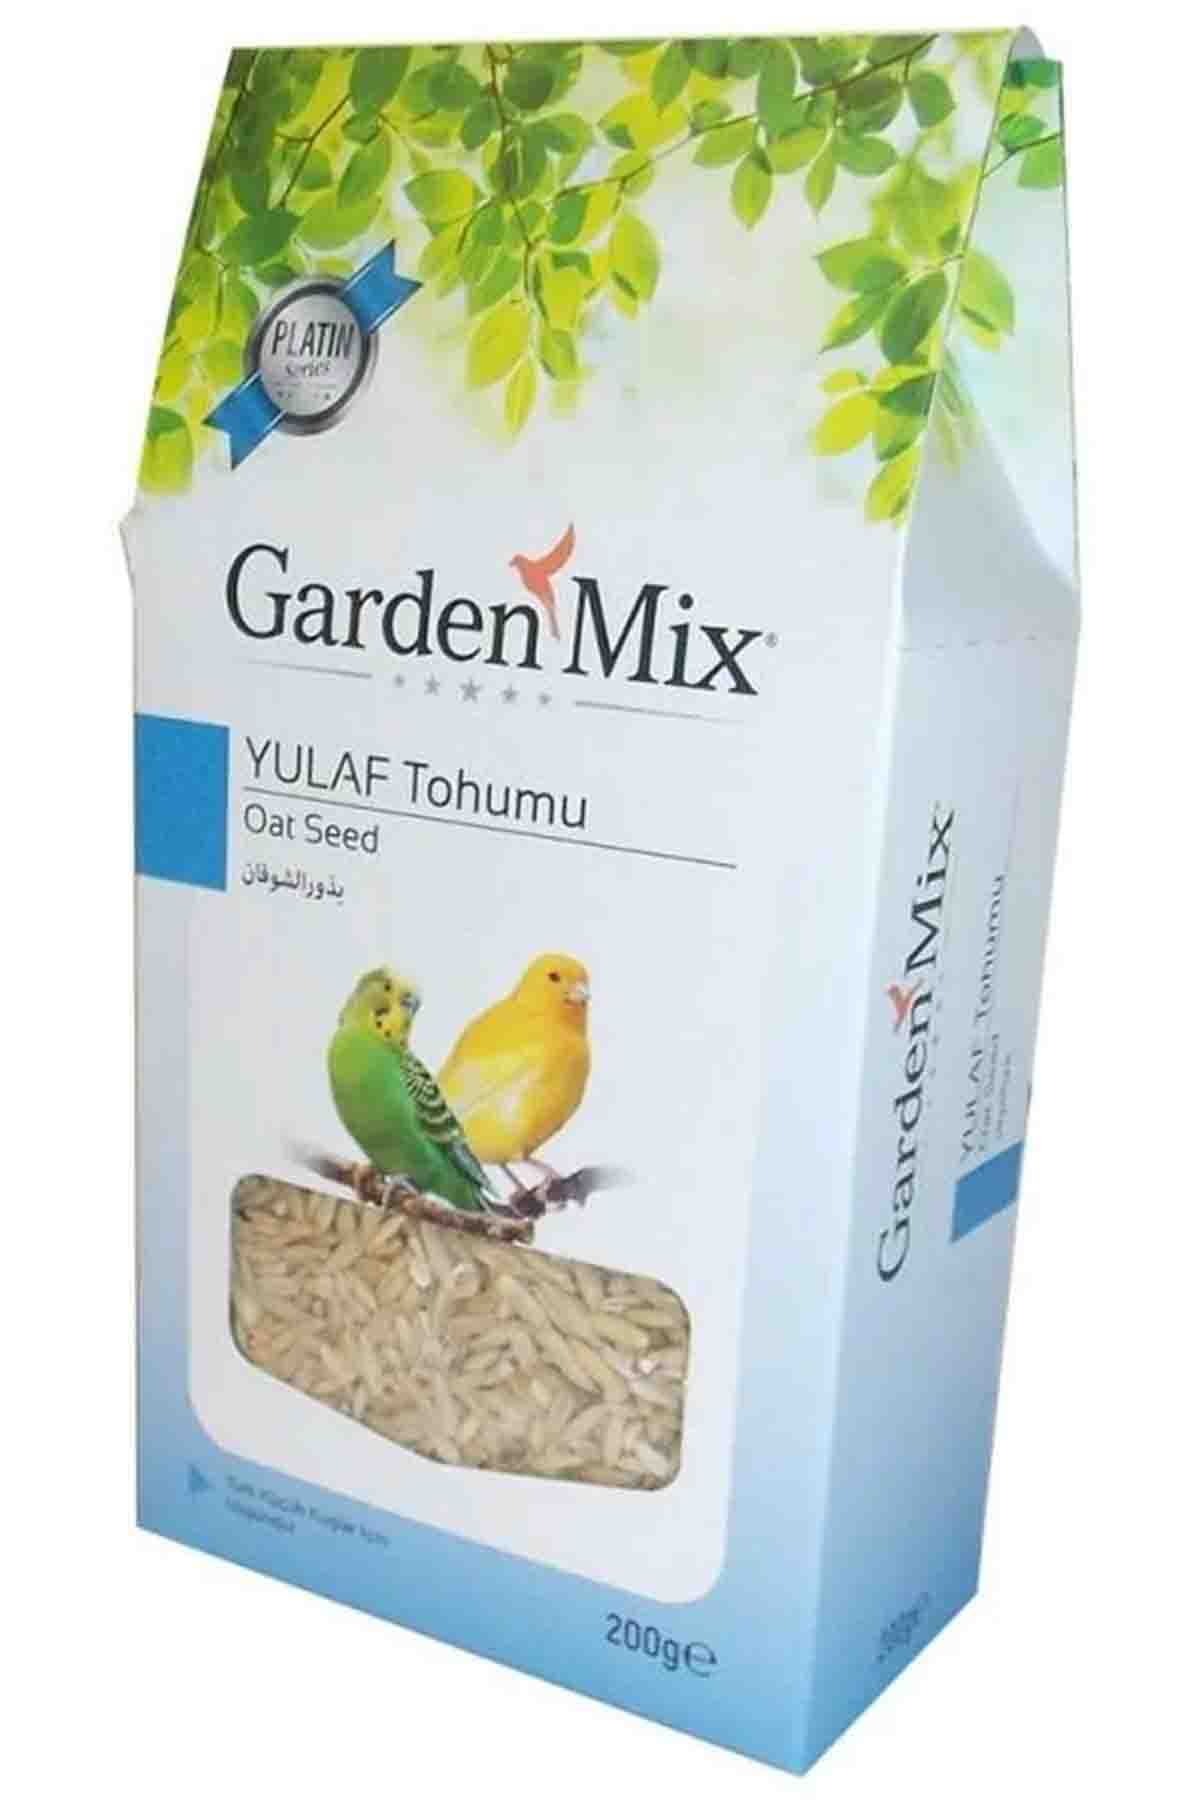  Gardenmix Platin Yulaf Tohumu 200gr